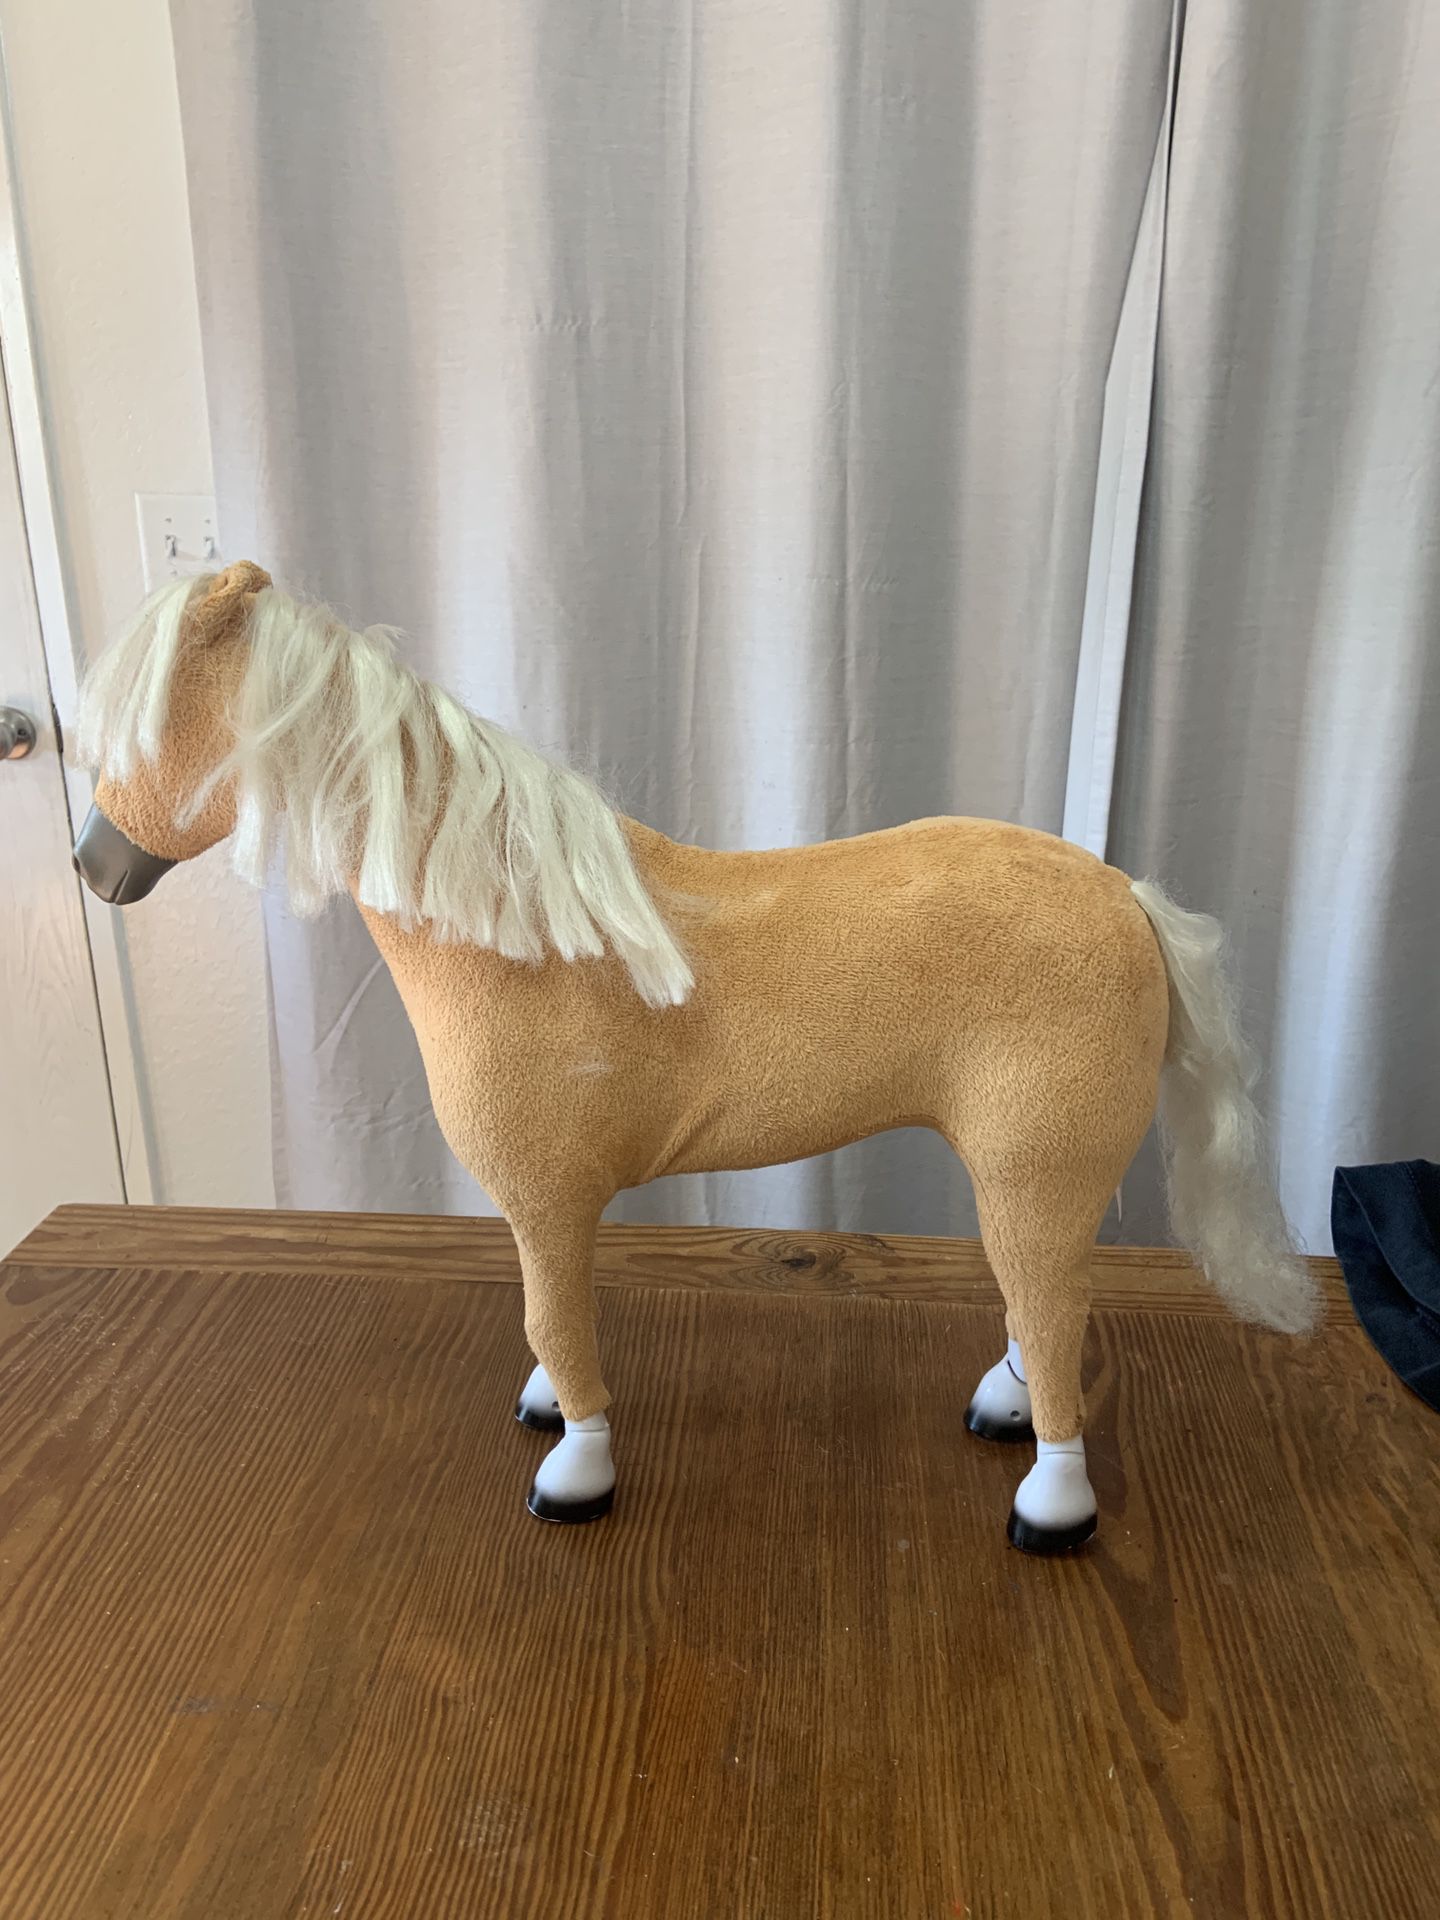 Horse doll